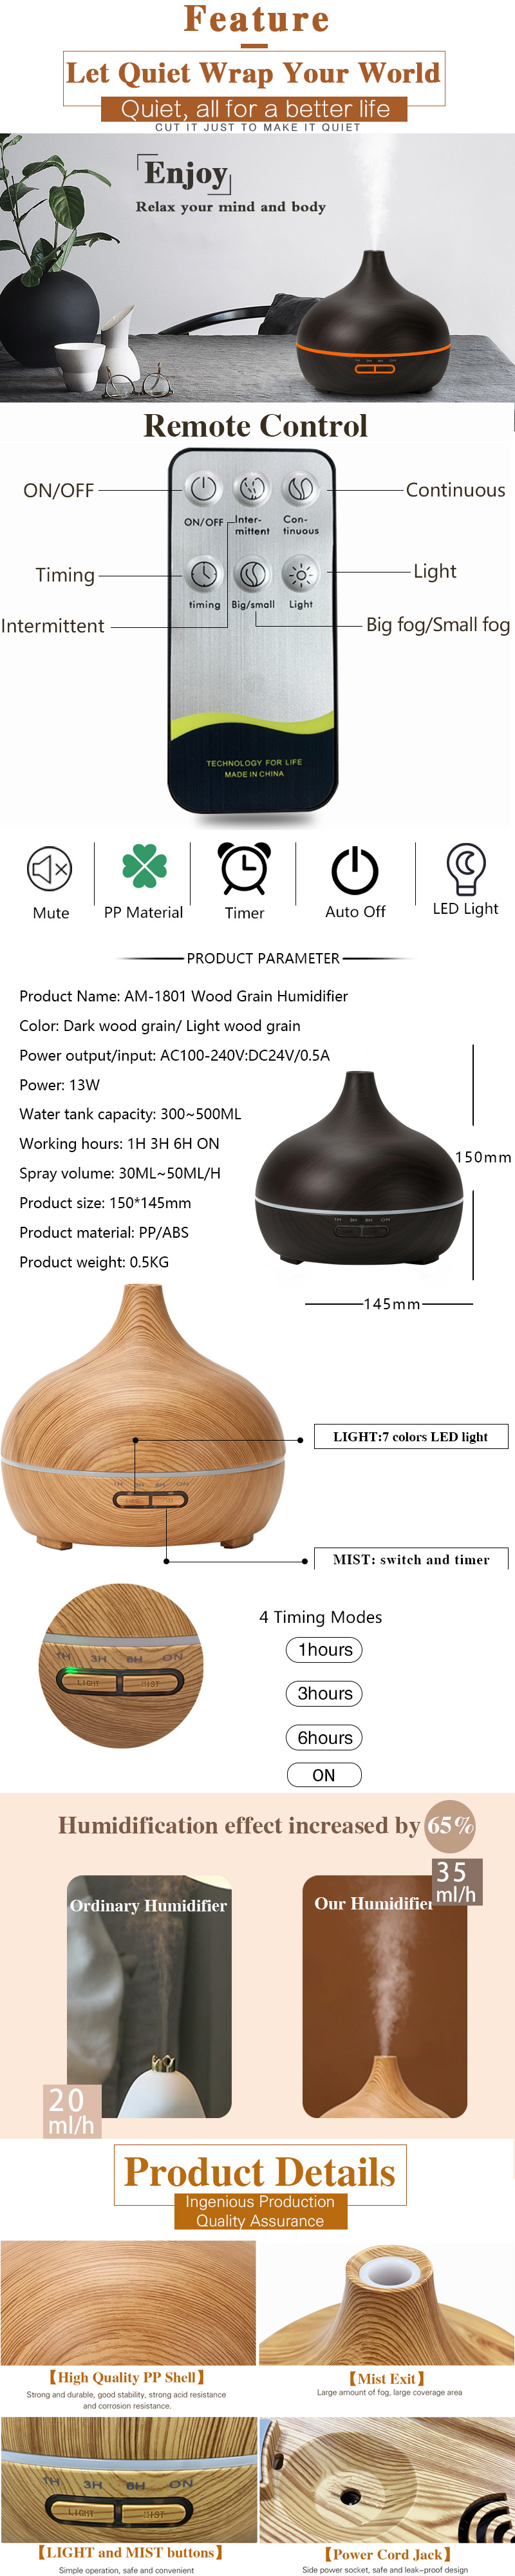 Wood grain humidifier | ultrasonic humidifier | aroma humidifier